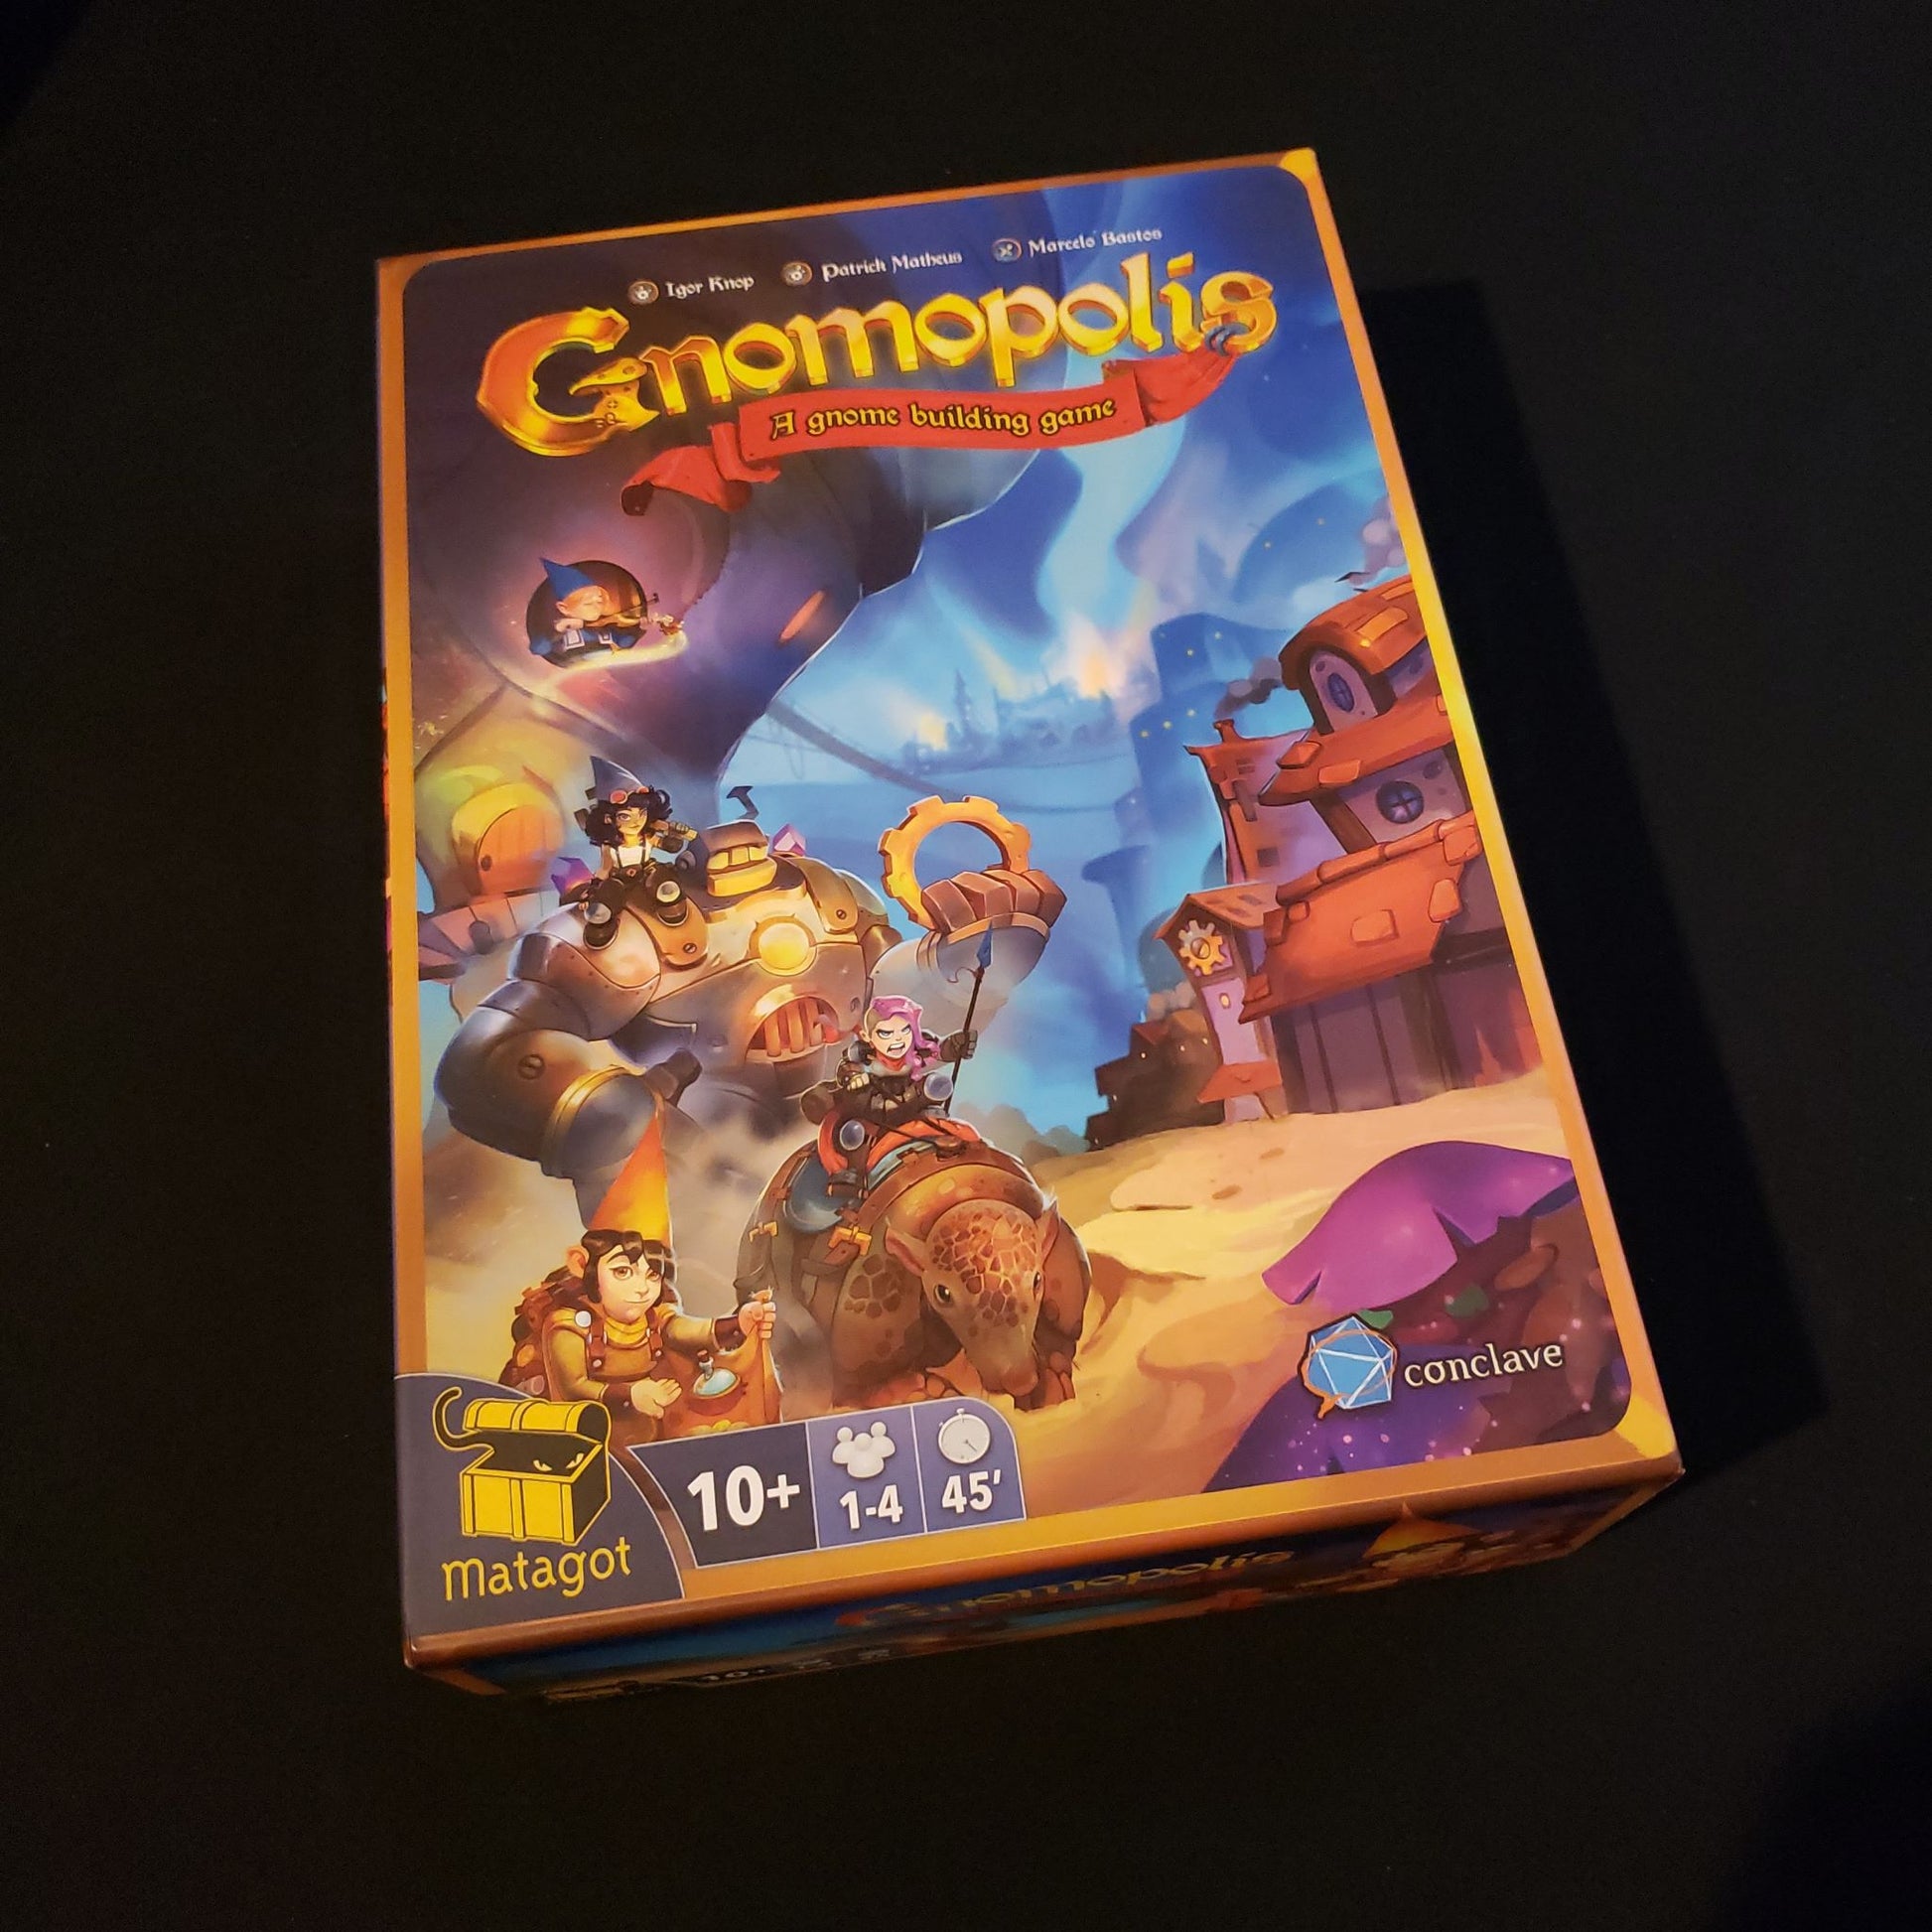 Gnomopolis board game - front cover of box